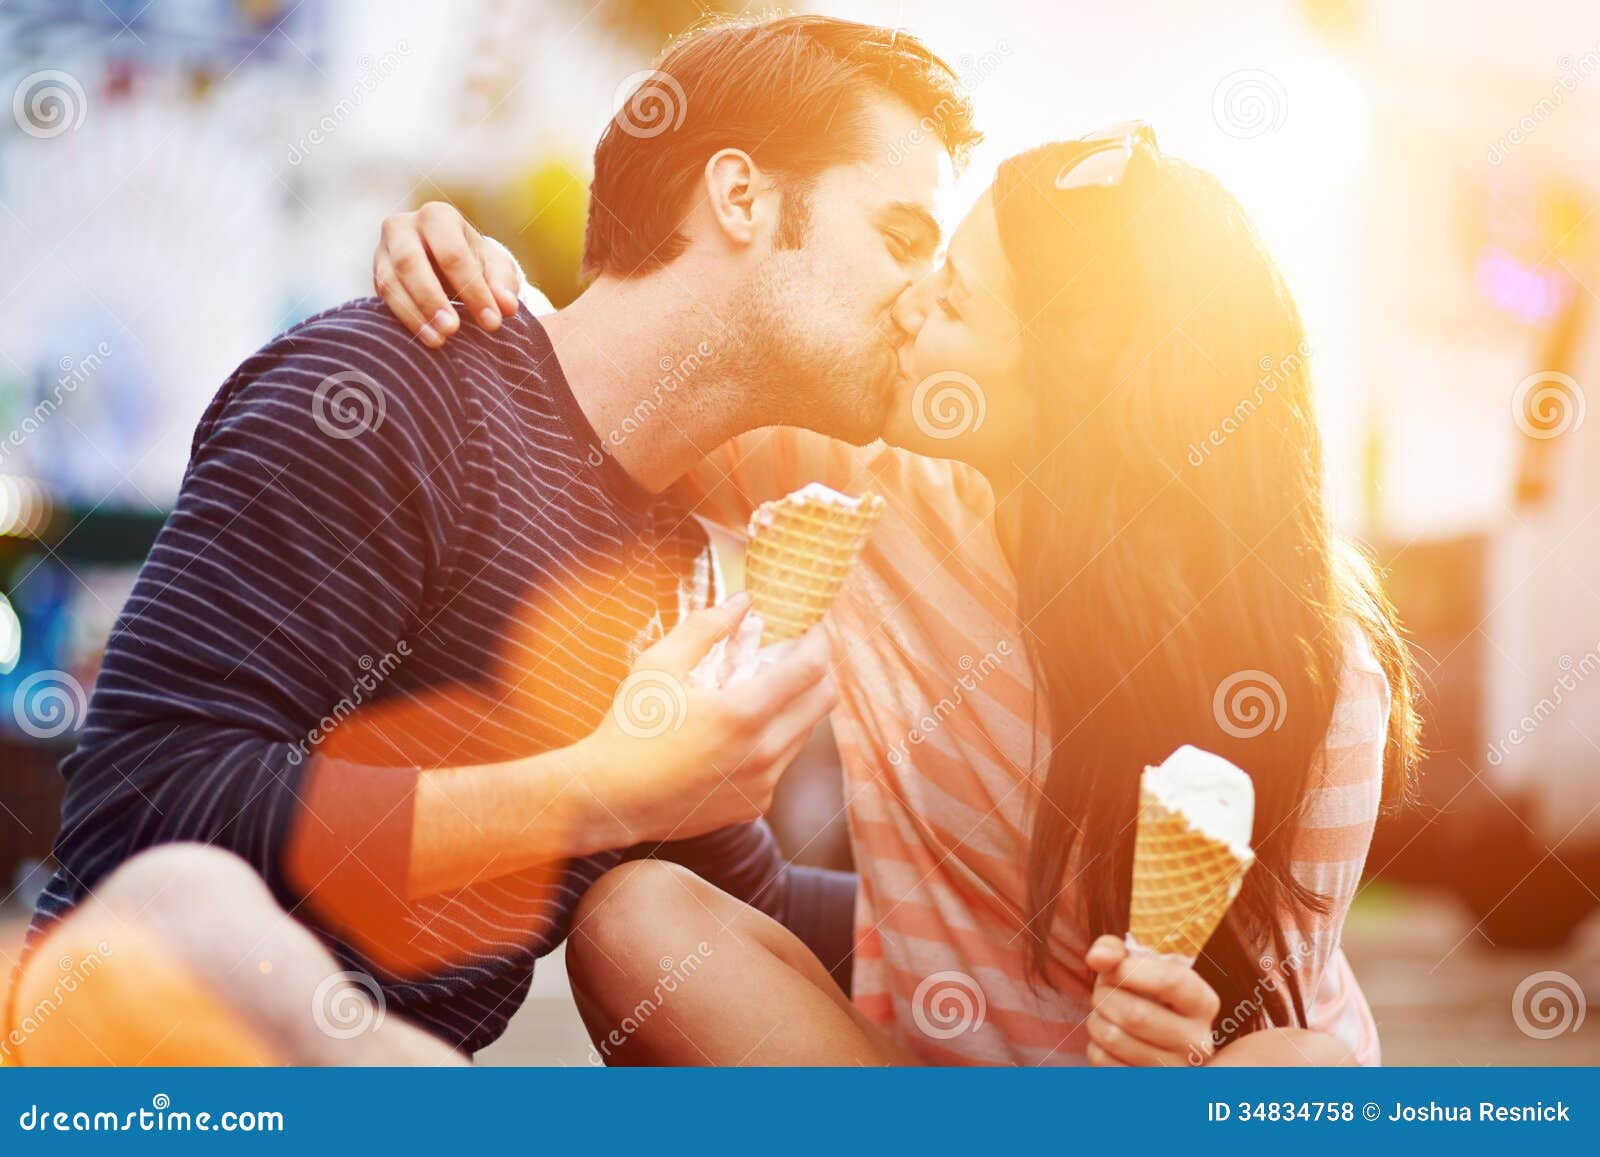 440 Romantic Couple Hd Wallpaper For Pc HD Terbaik